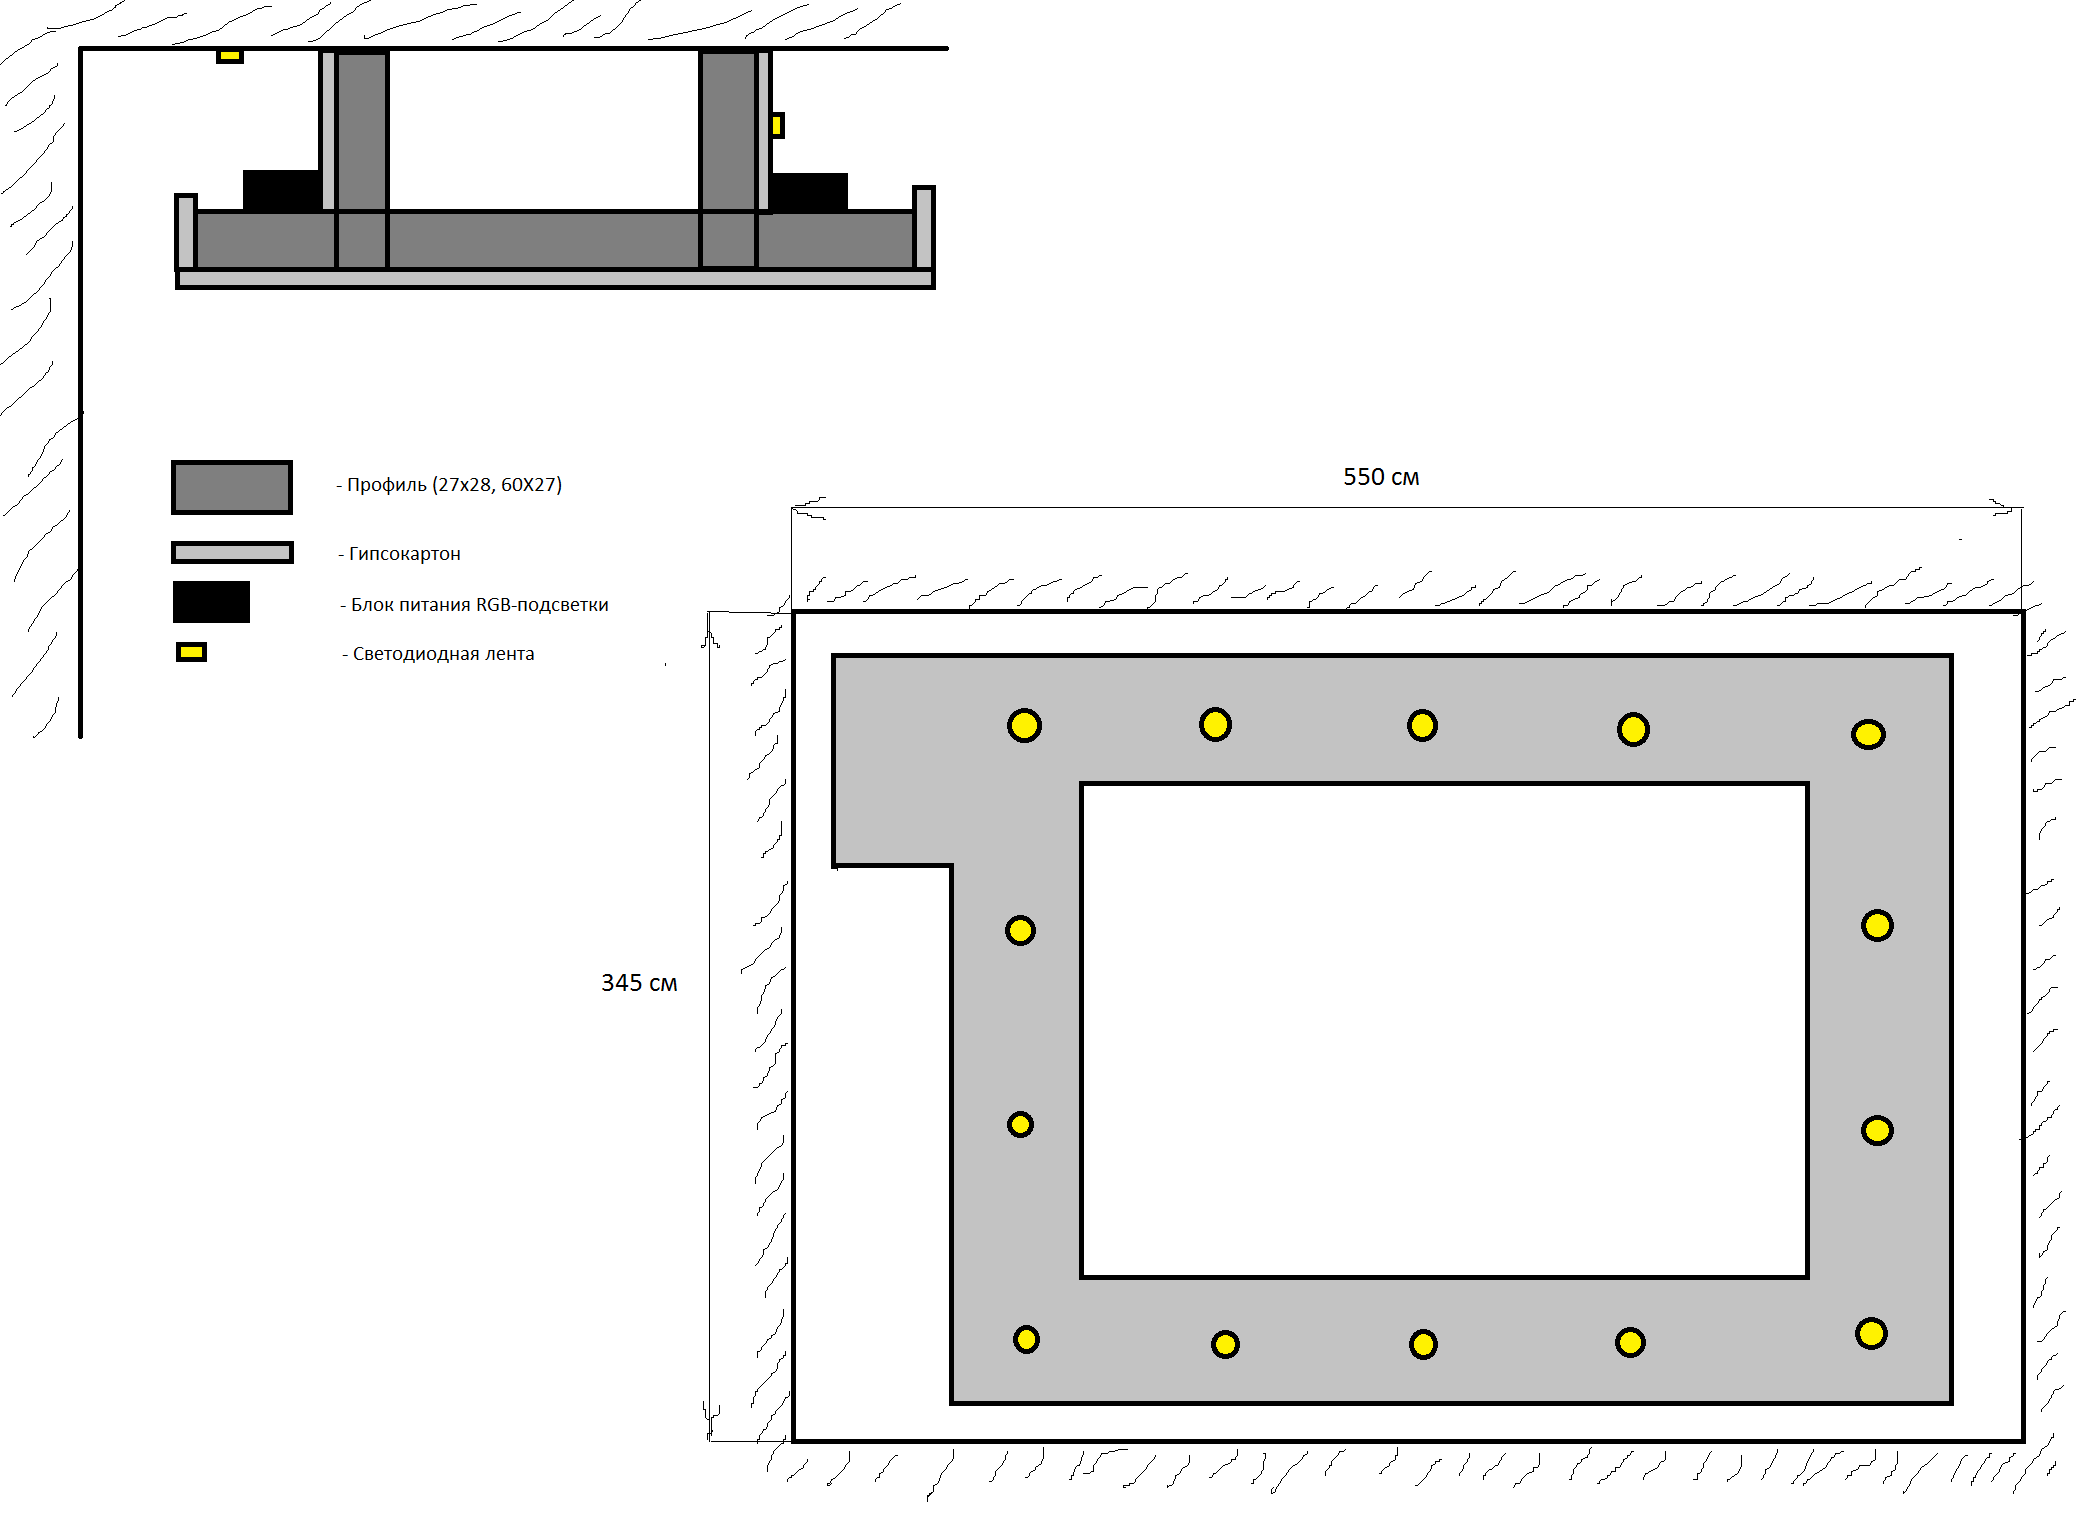 Схема монтажа двухуровневого потолка ГКЛ